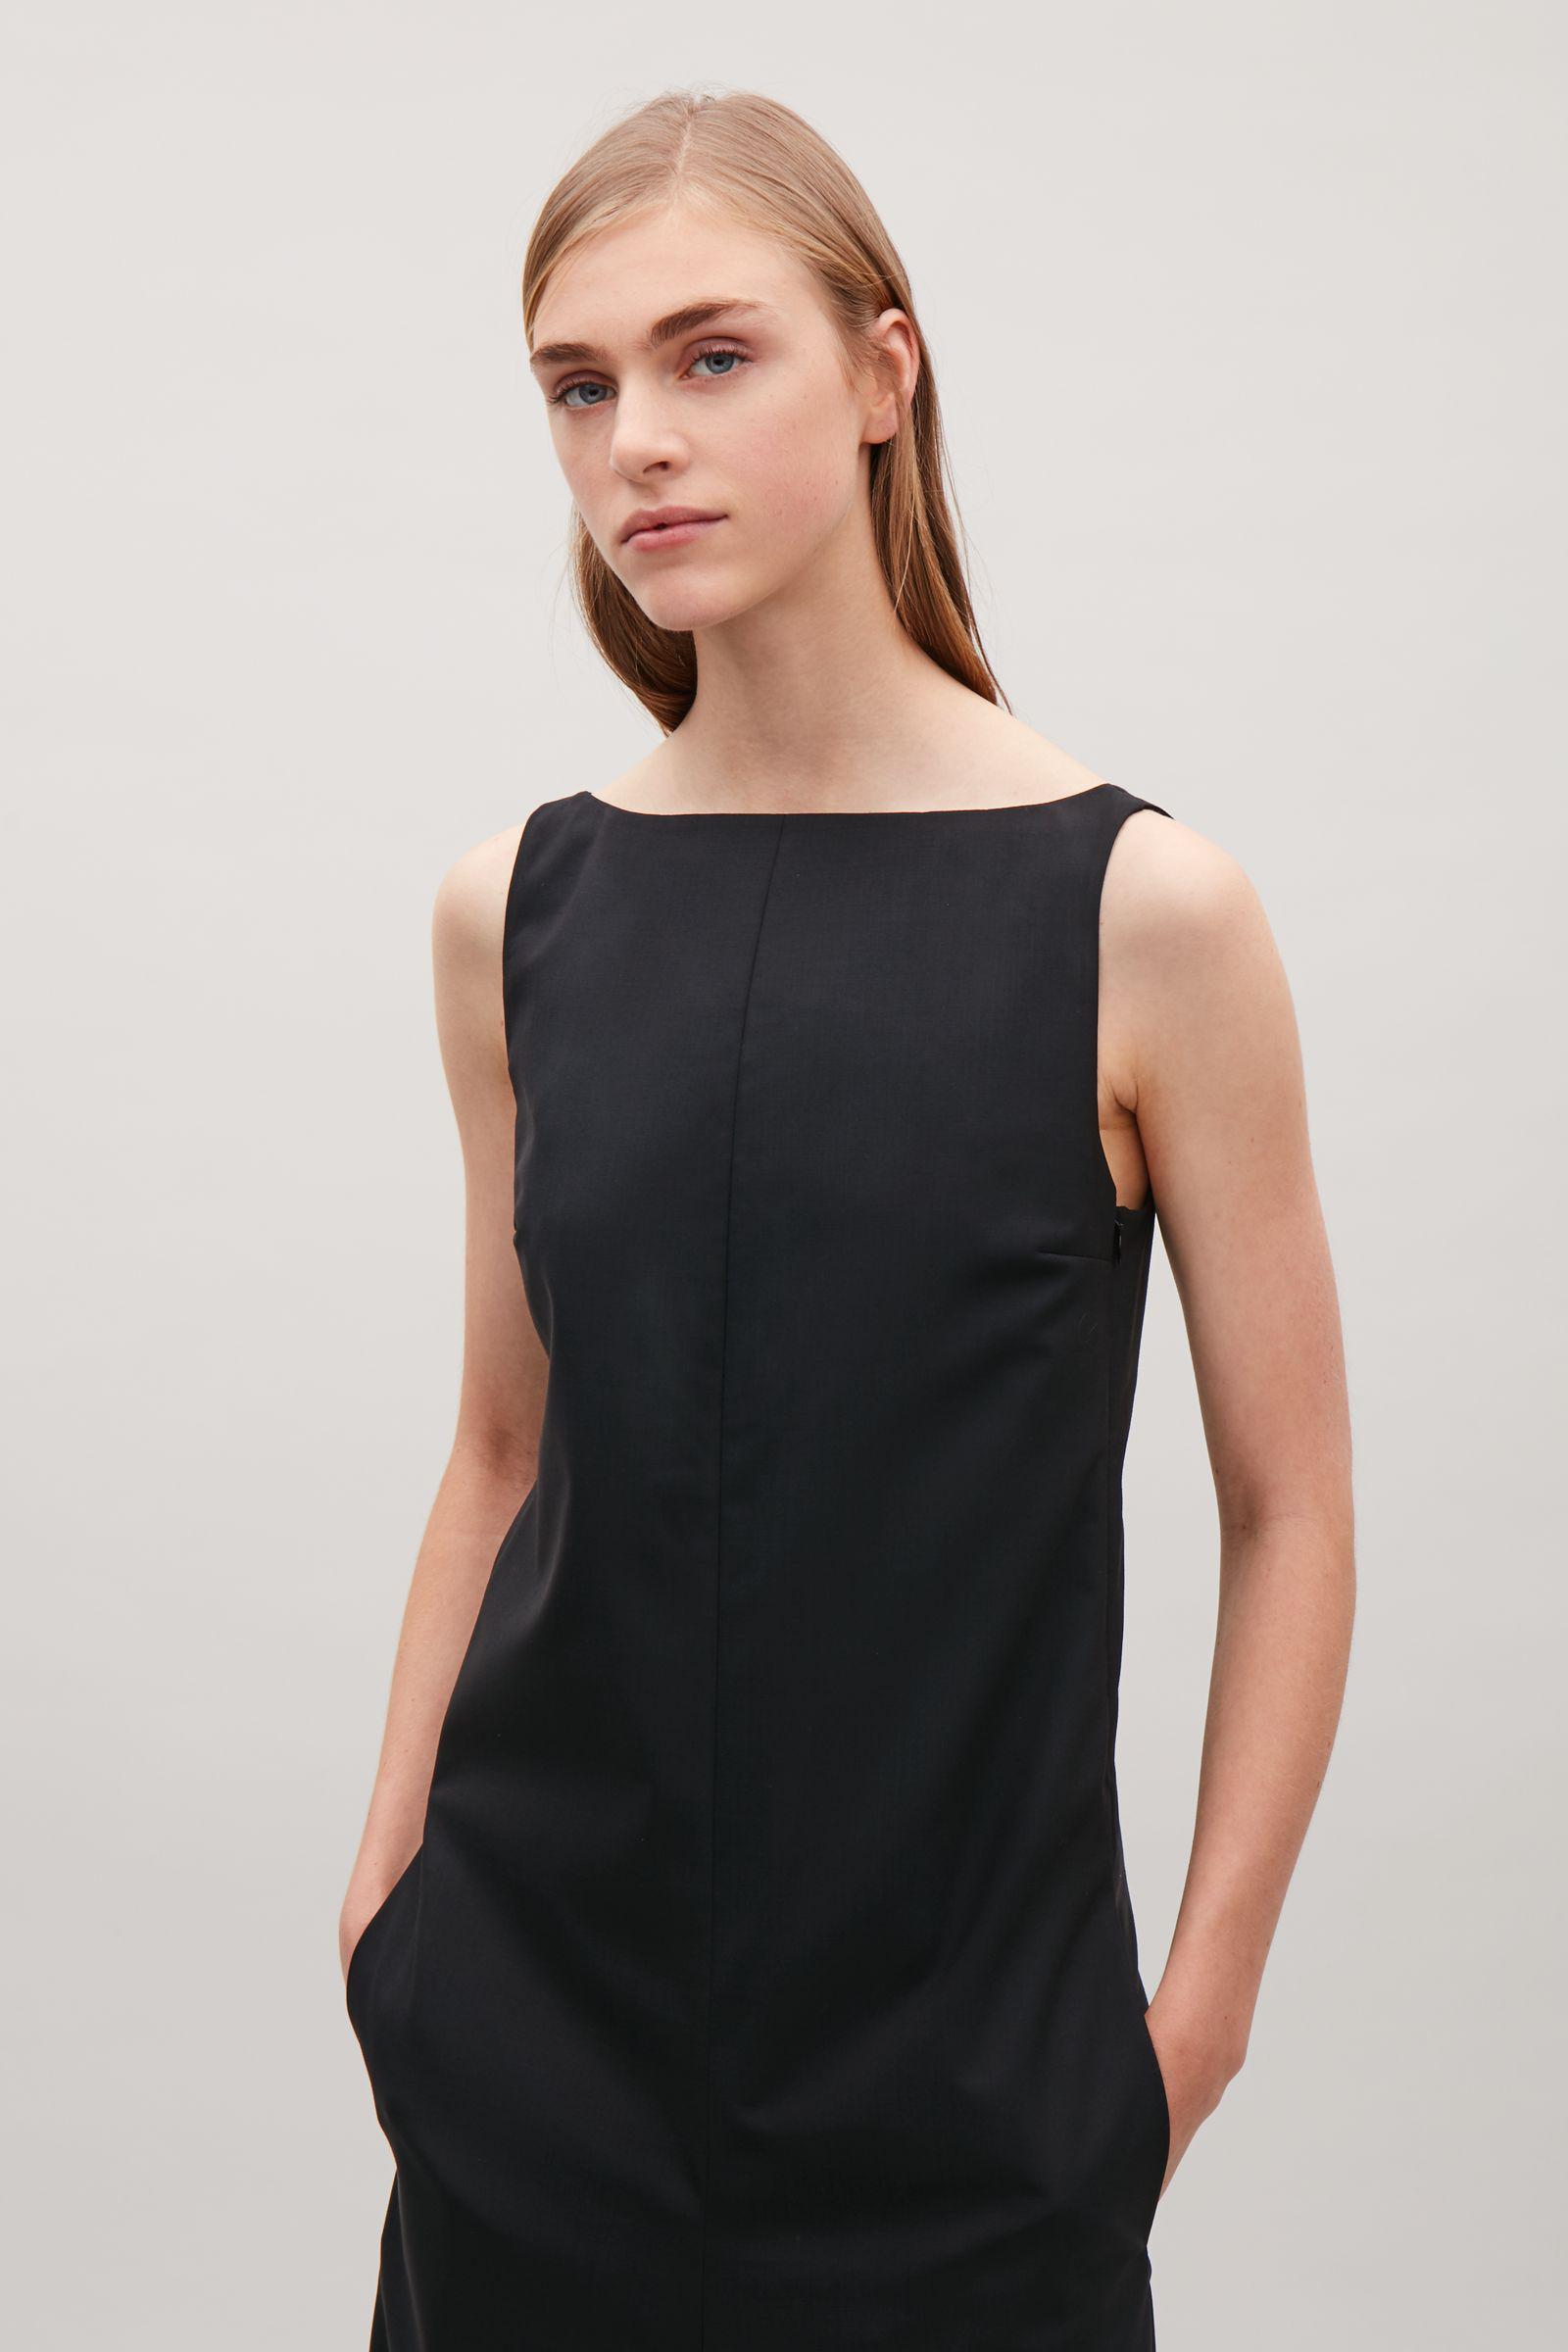 COS Wool Low Scoop-back Dress in Black - Lyst